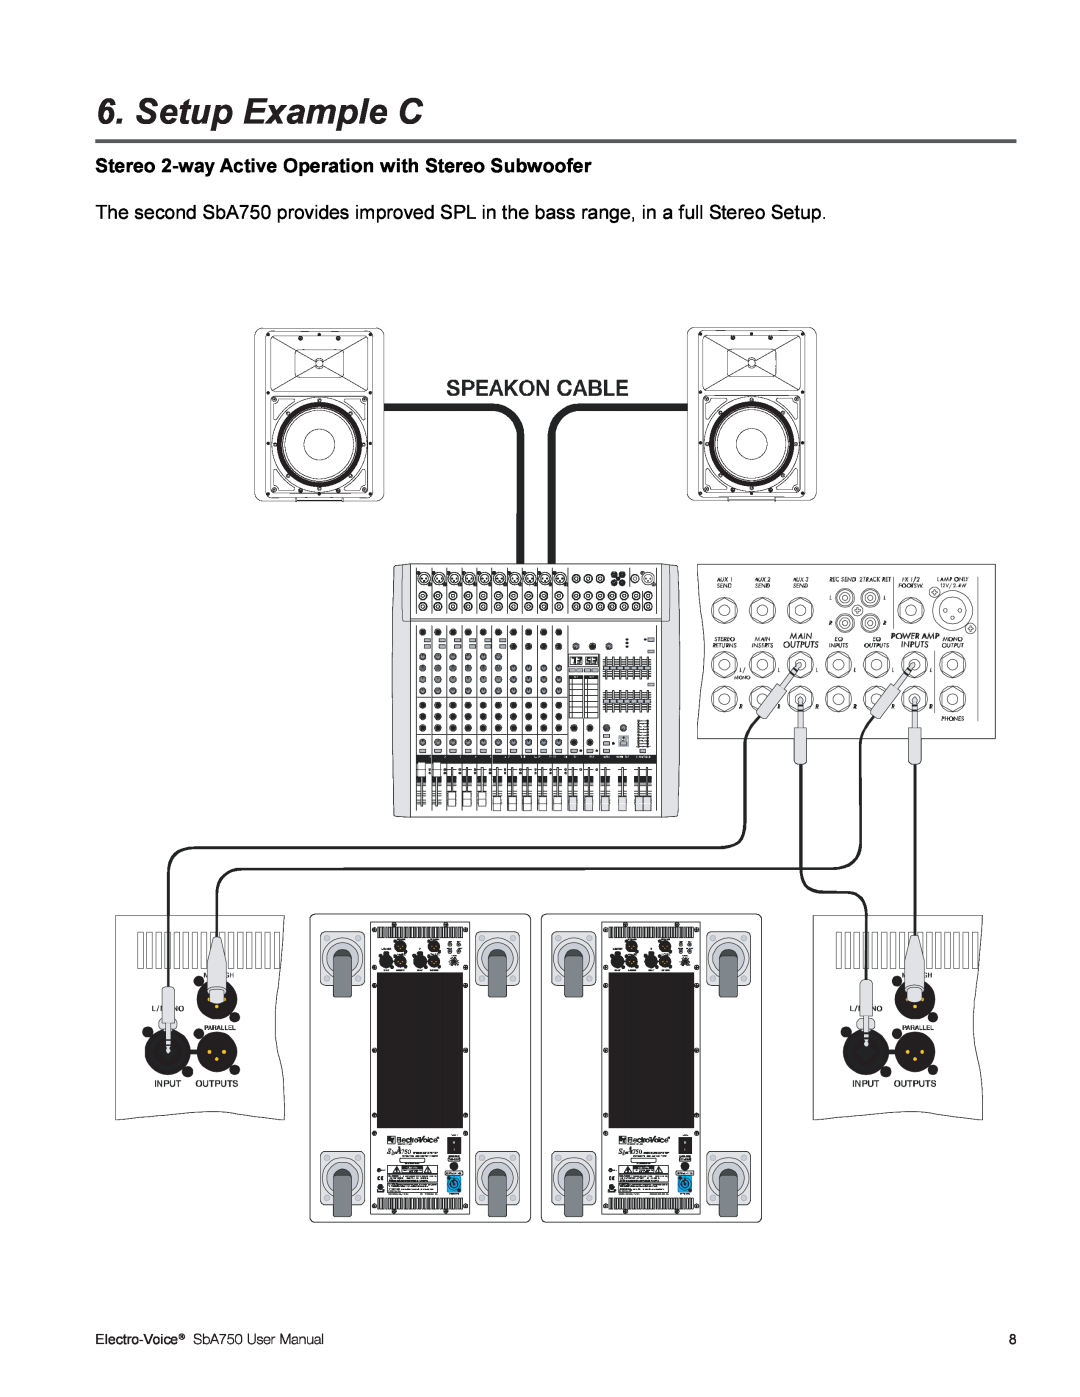 Electro-Voice SBA750 user manual Setup Example C, Electro-Voice 